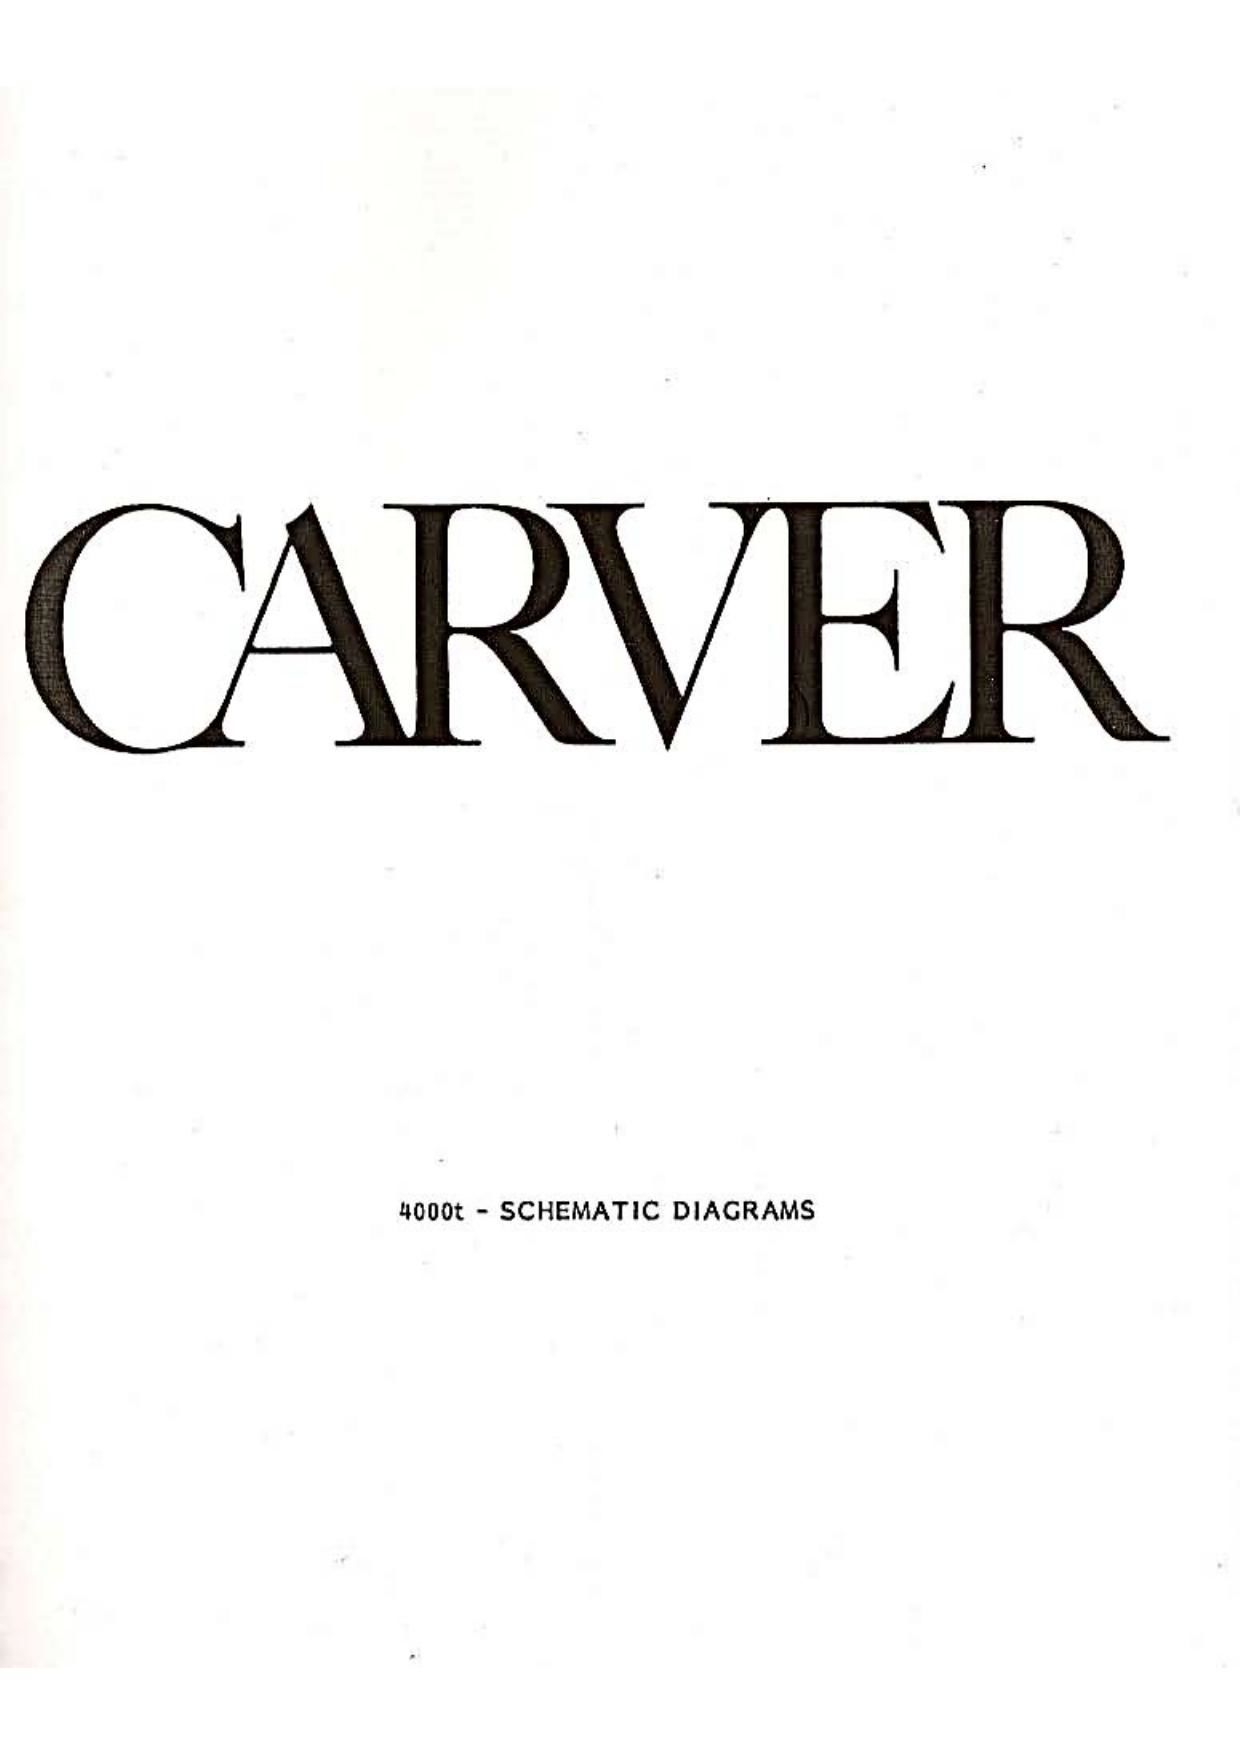 Carver 4000T Schematic